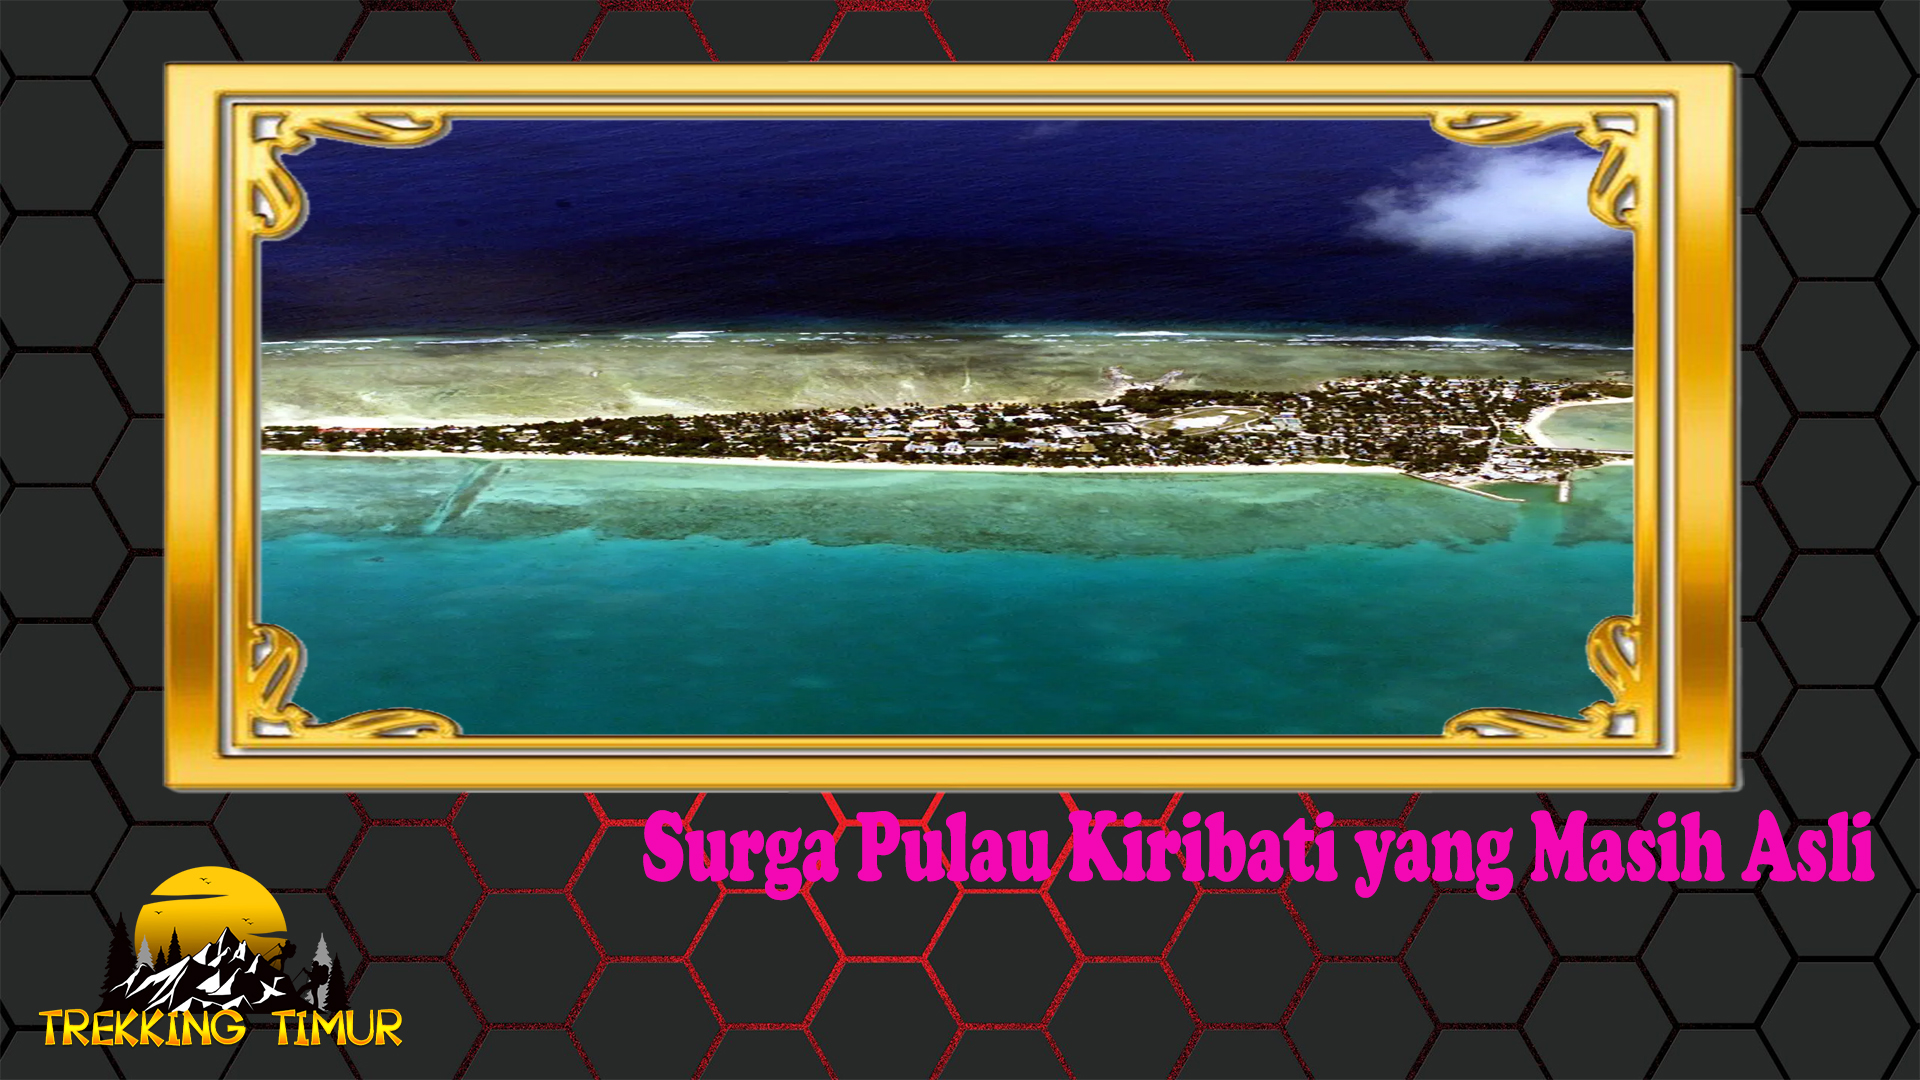 Surga Pulau Kiribati yang Masih Asli